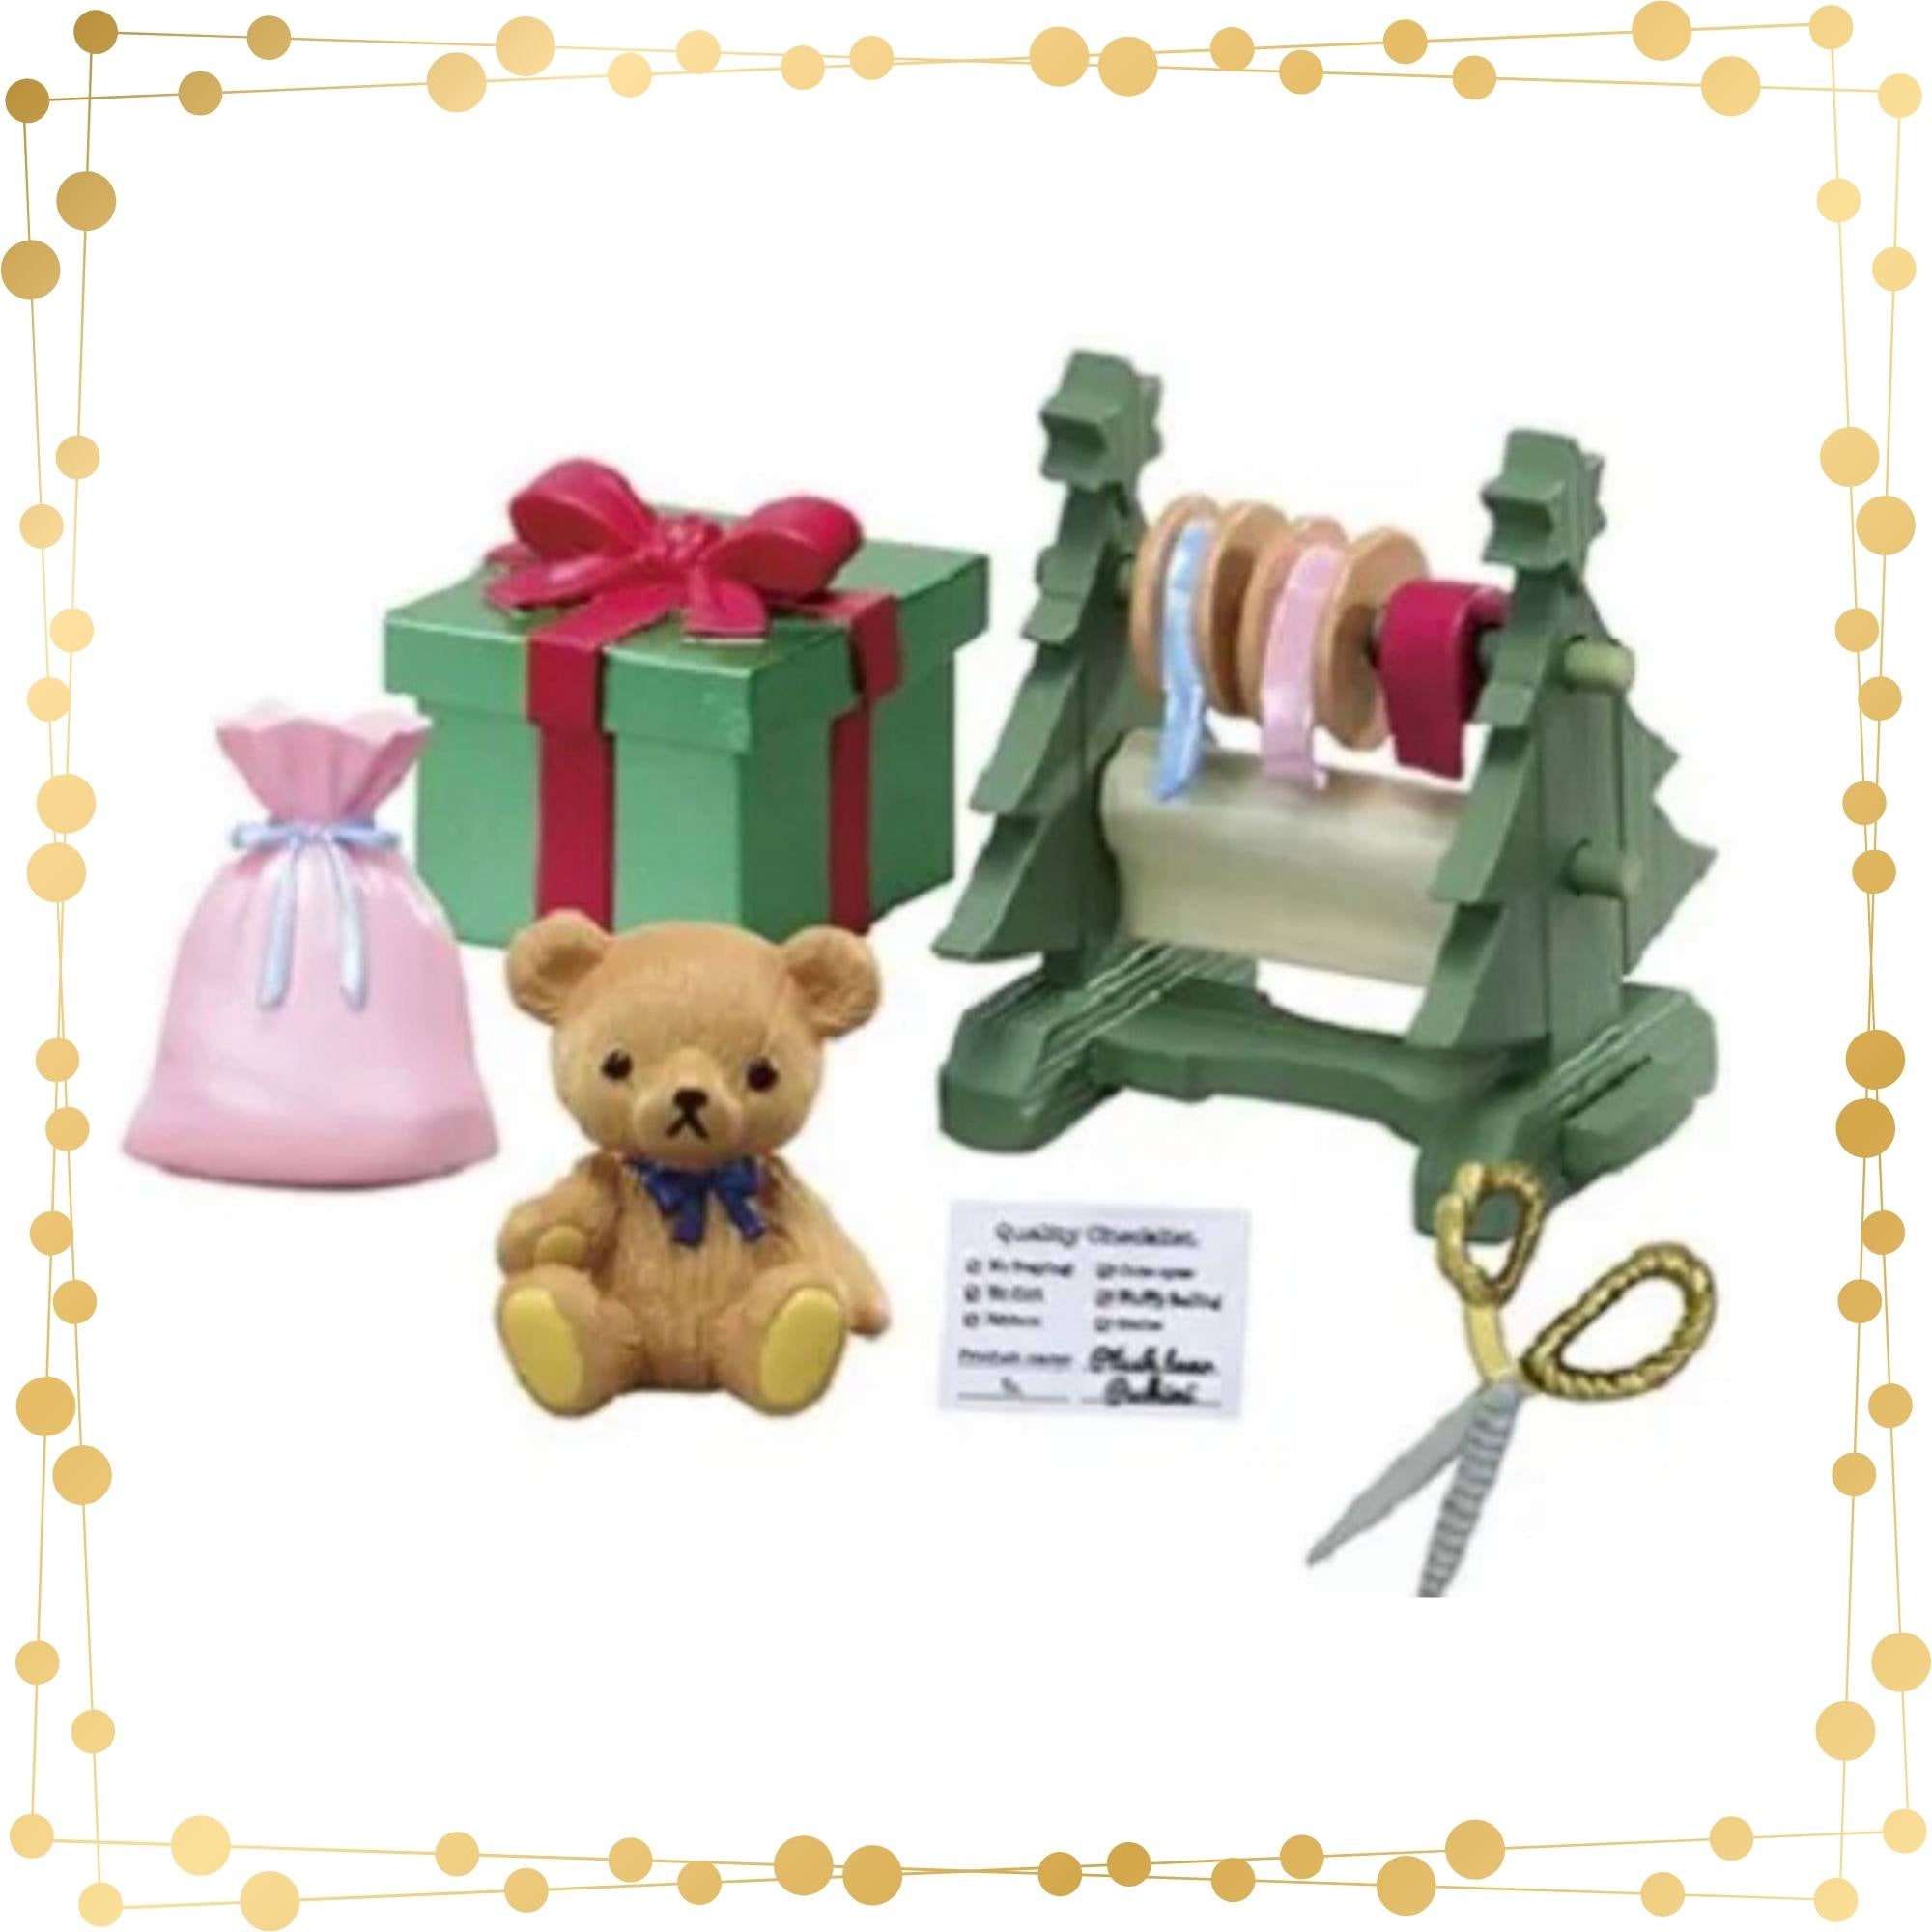 Miniature Gift Wrap Station